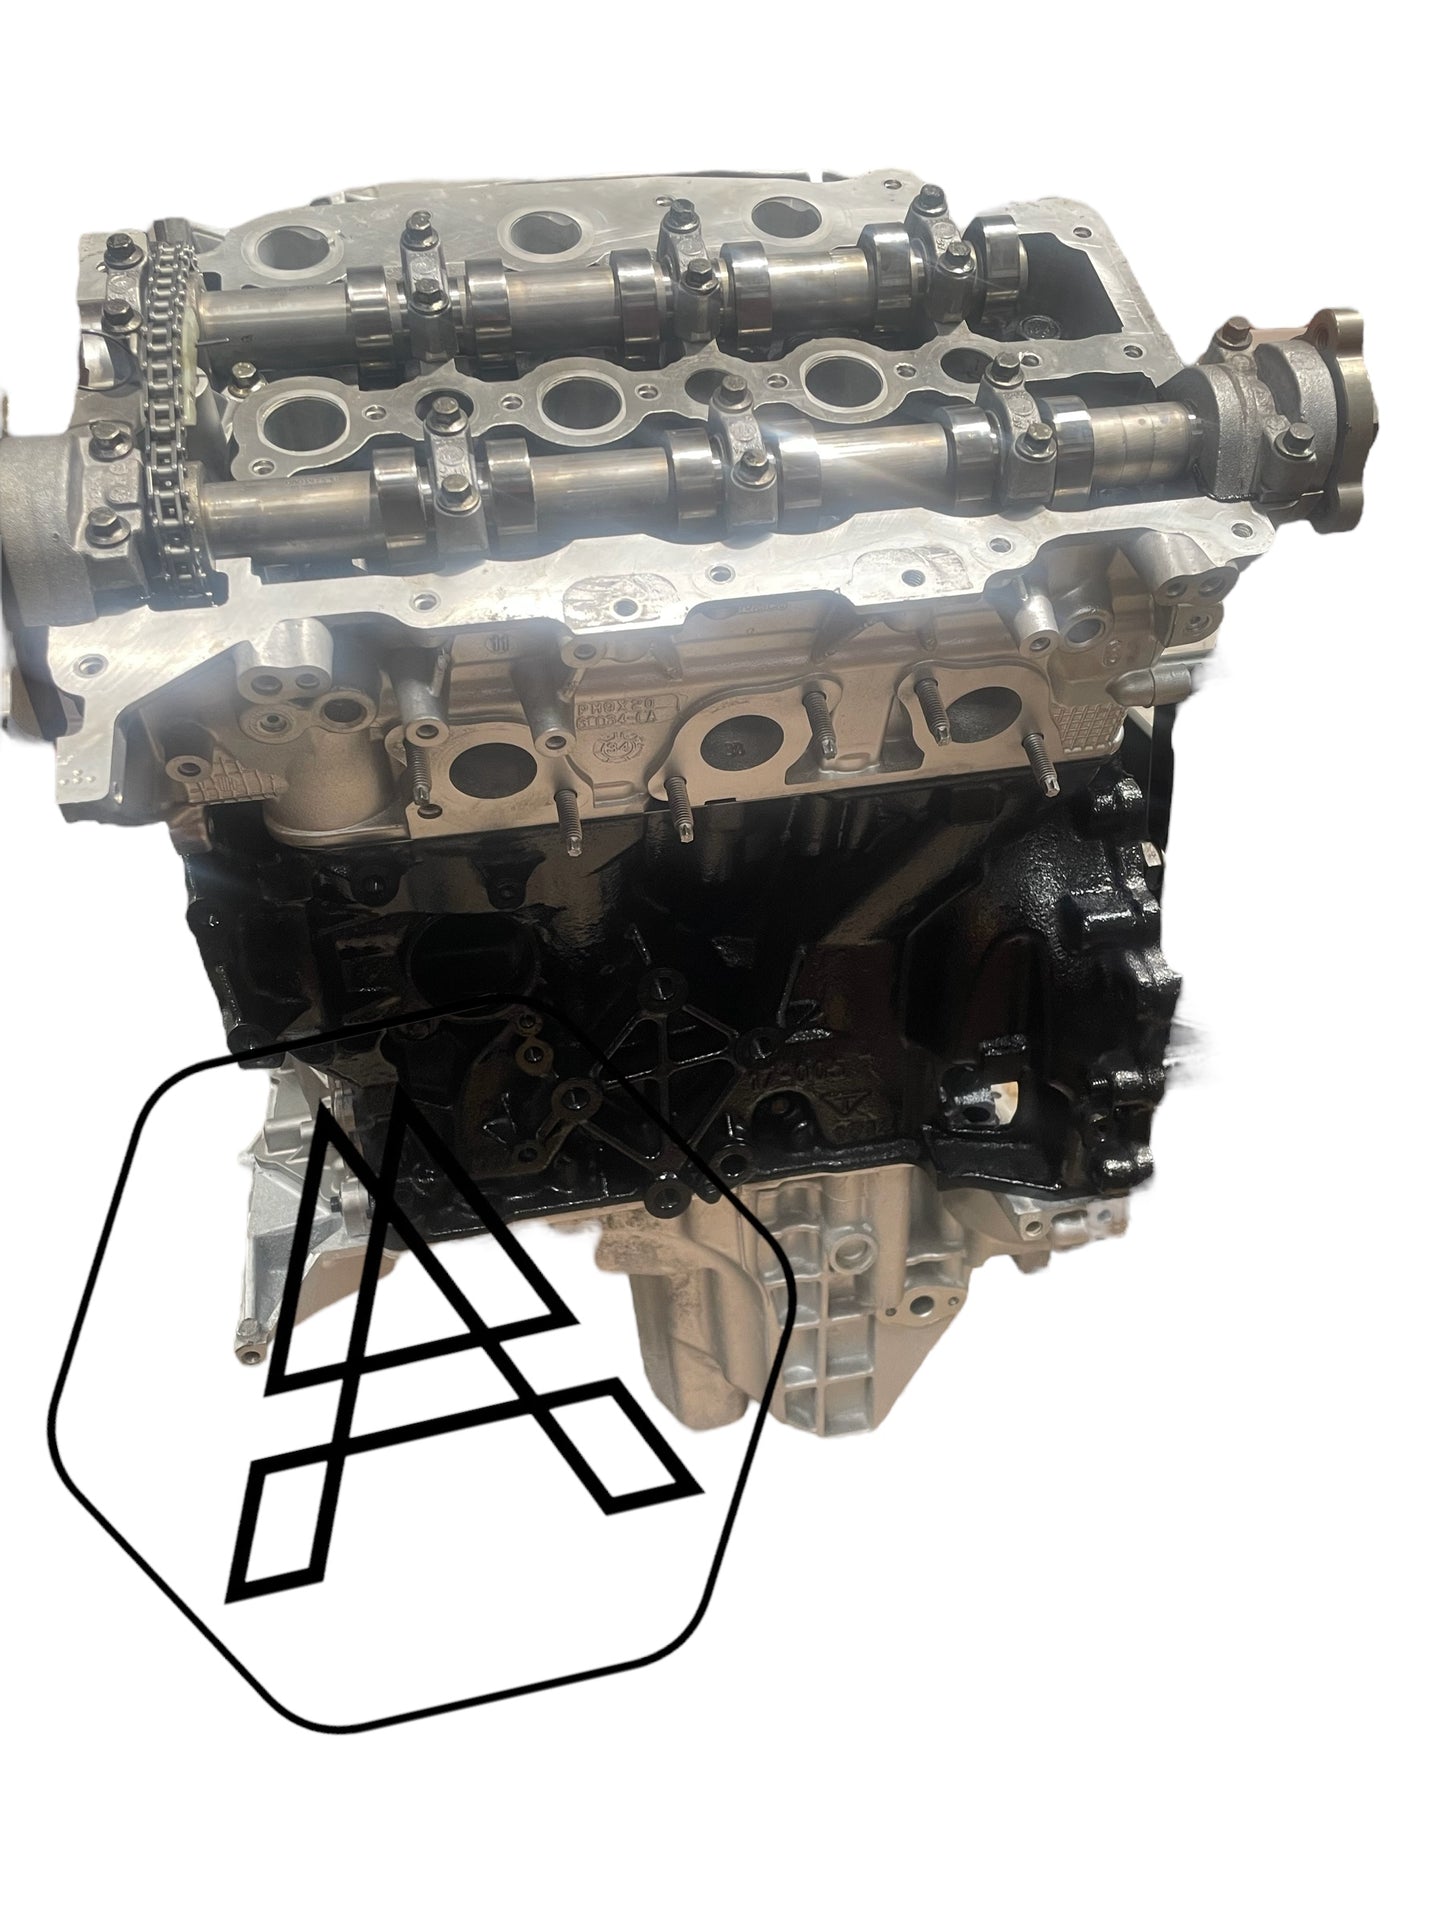 Landrover / Range Rover 3.0 diesel engine 306dt